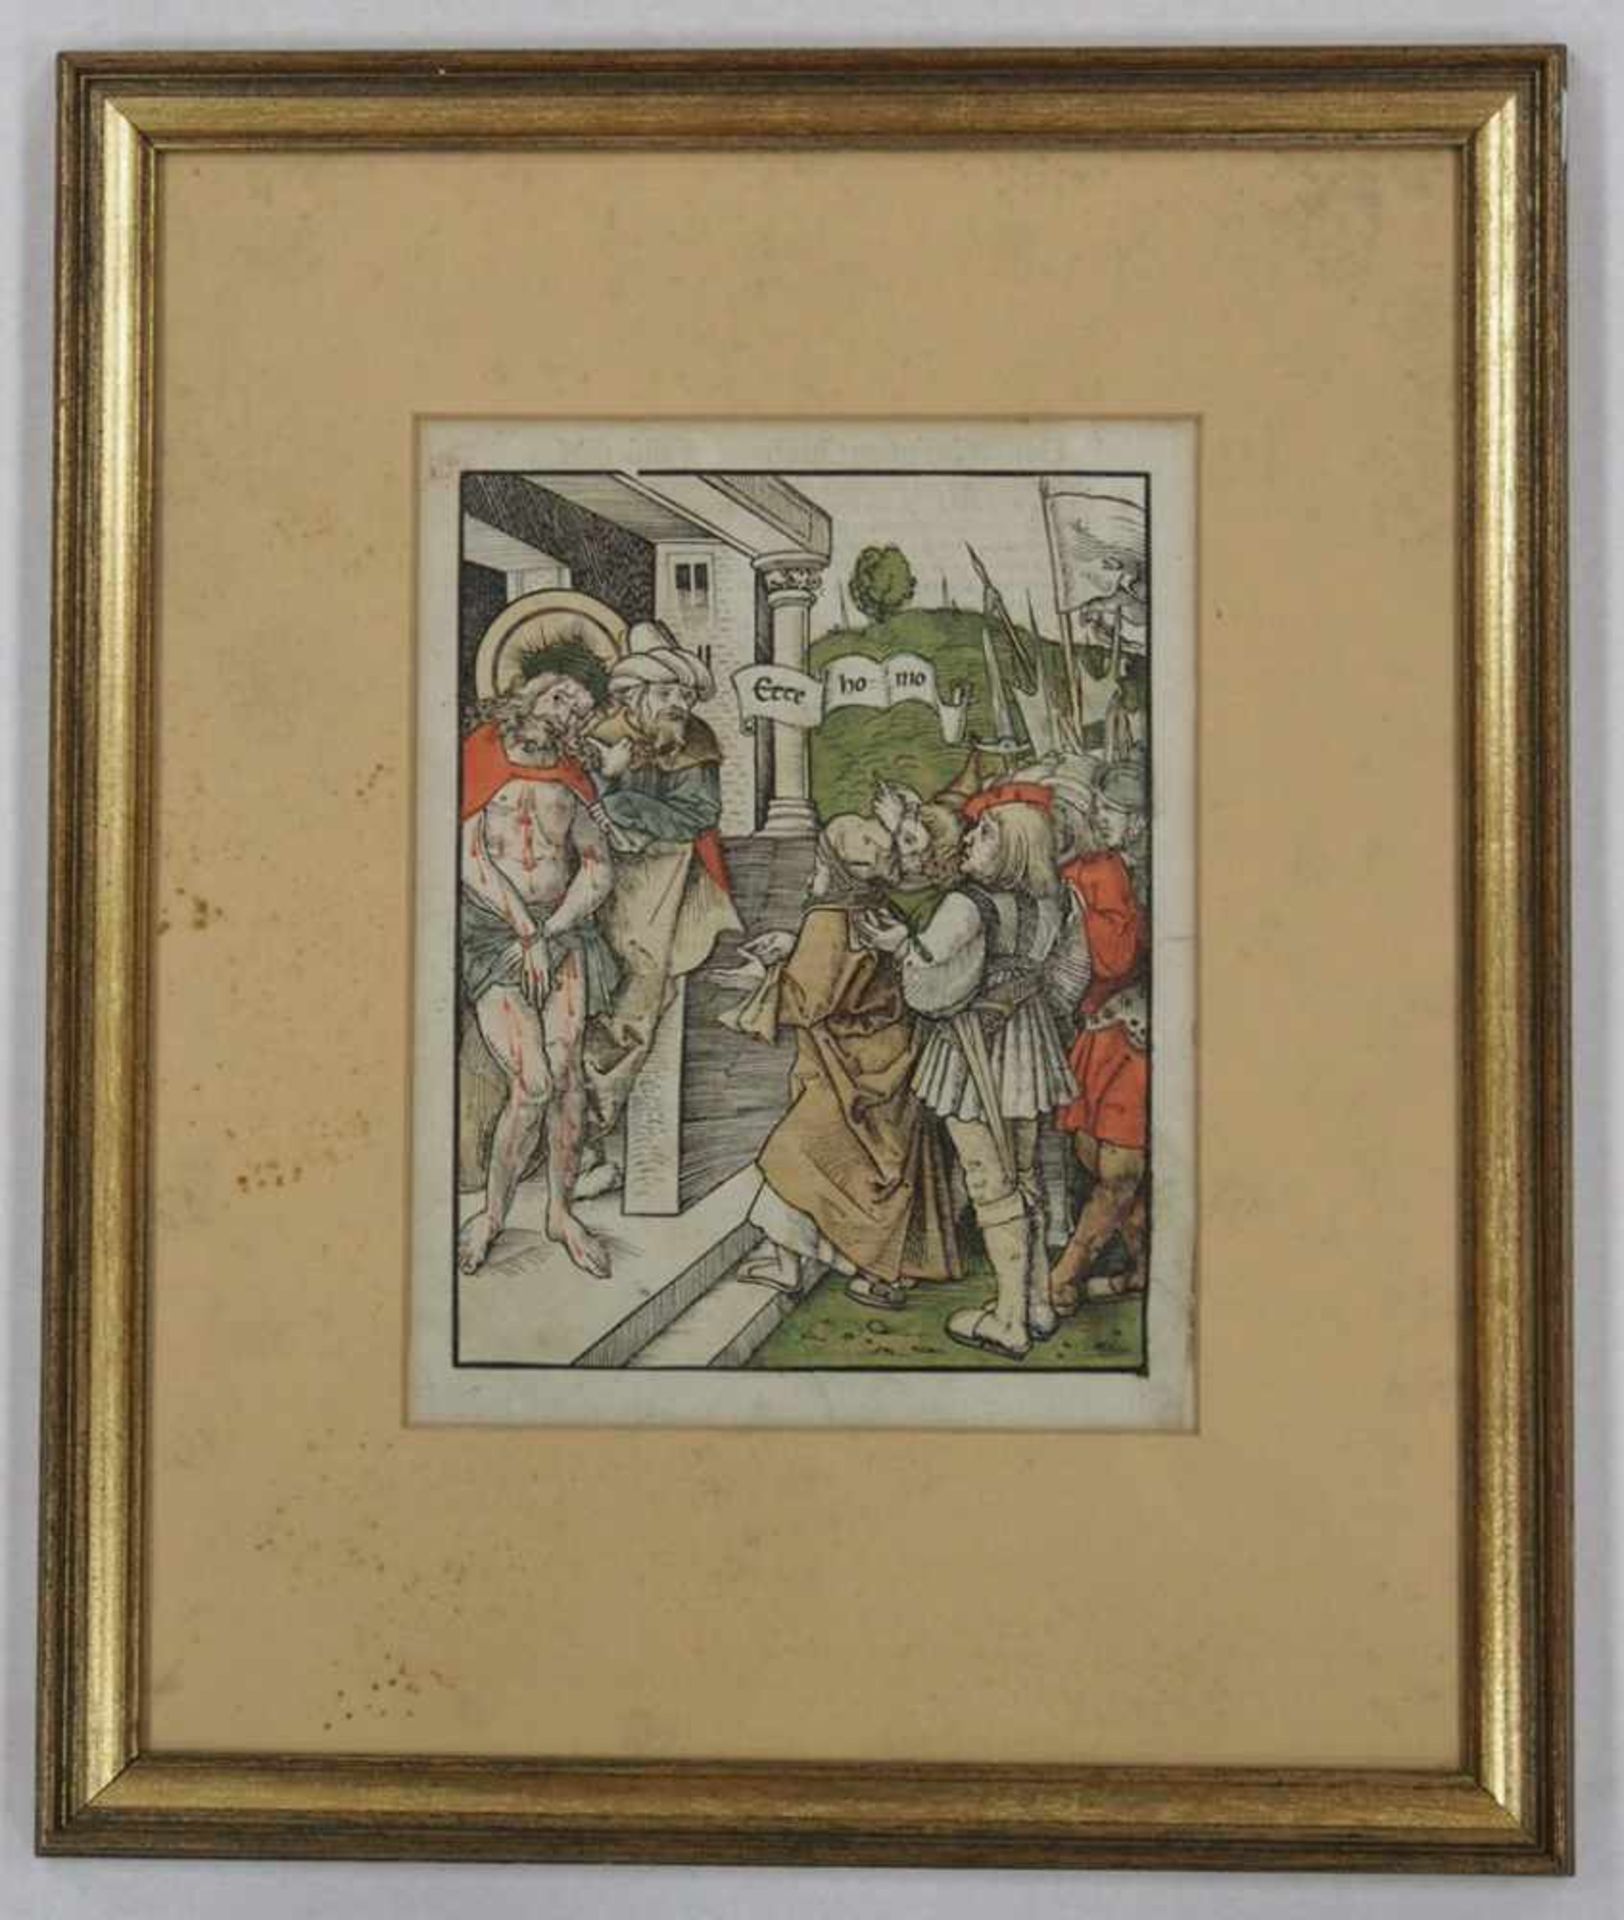 WECHTLIN, Hans1480-1520Ecce HomoHolzschnitt, altkoloriert, Straßburg 1508, 24 x 18,5 cm, gerahmt - Bild 2 aus 2